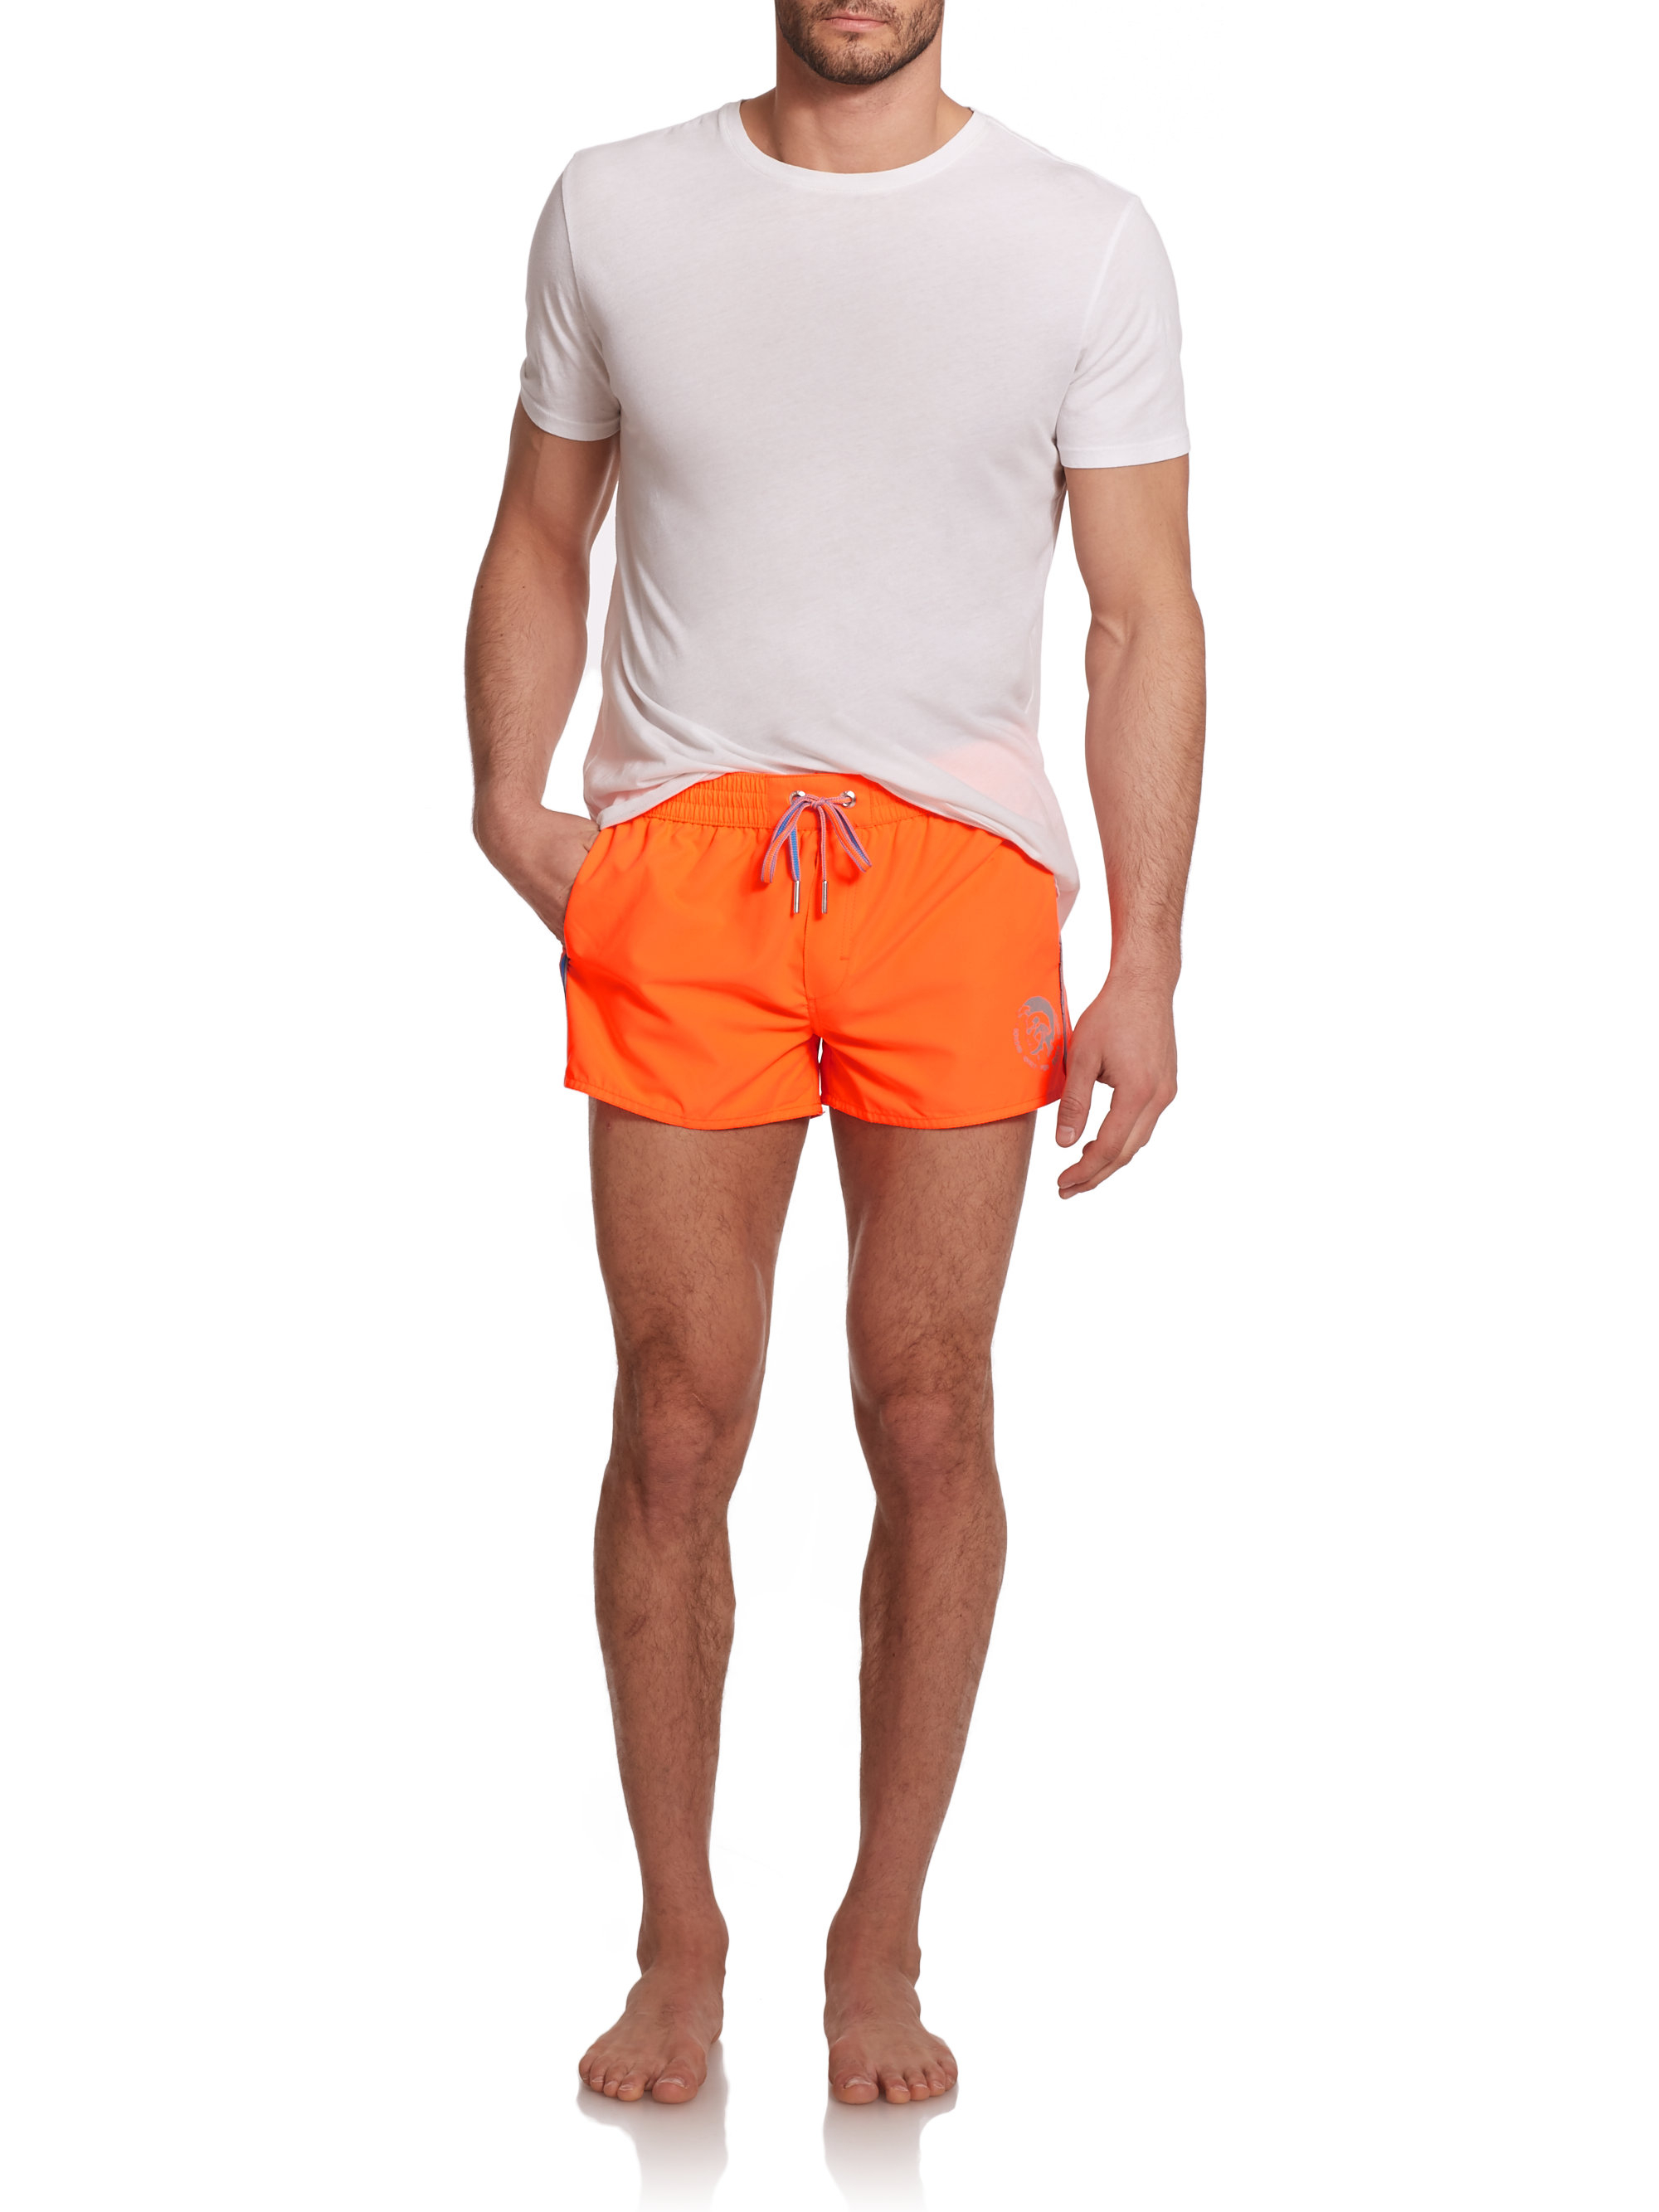 Lyst - DIESEL Coral Rif Swim Shorts in Orange for Men